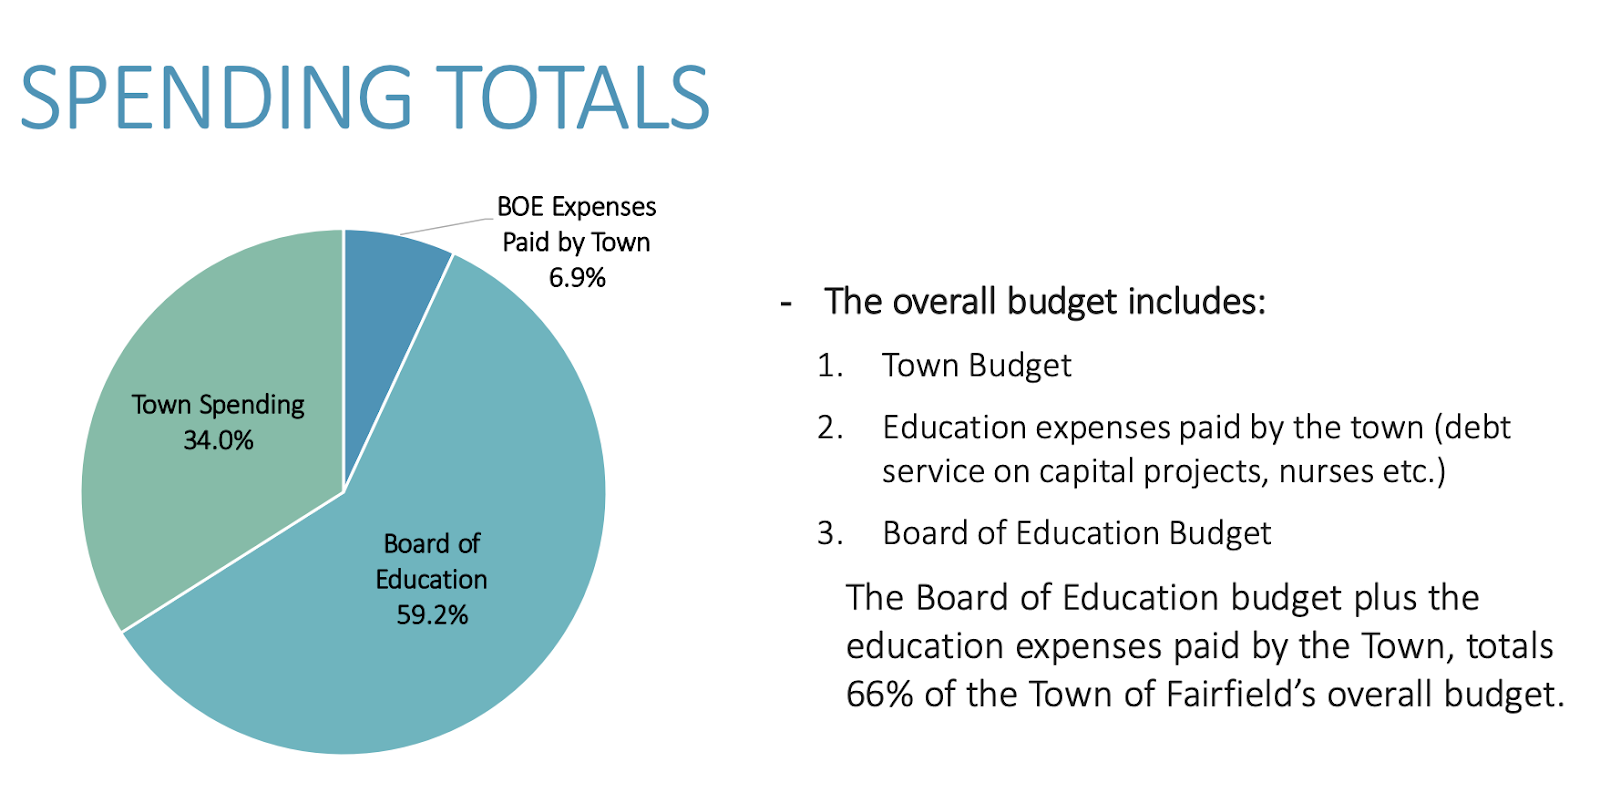 A look at the spending breakdown in Fairfield